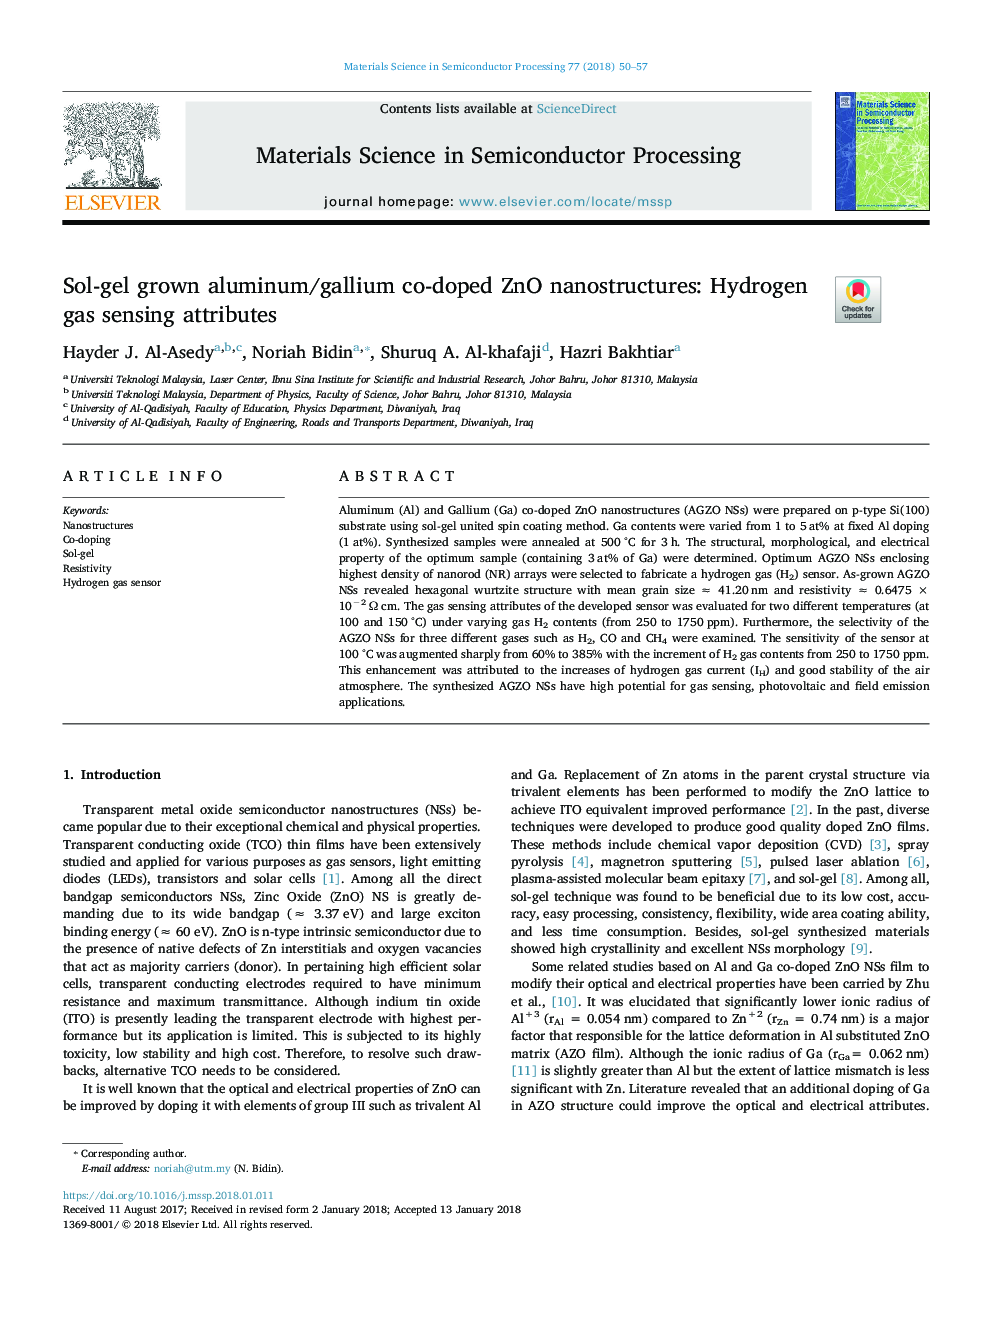 Sol-gel grown aluminum/gallium co-doped ZnO nanostructures: Hydrogen gas sensing attributes